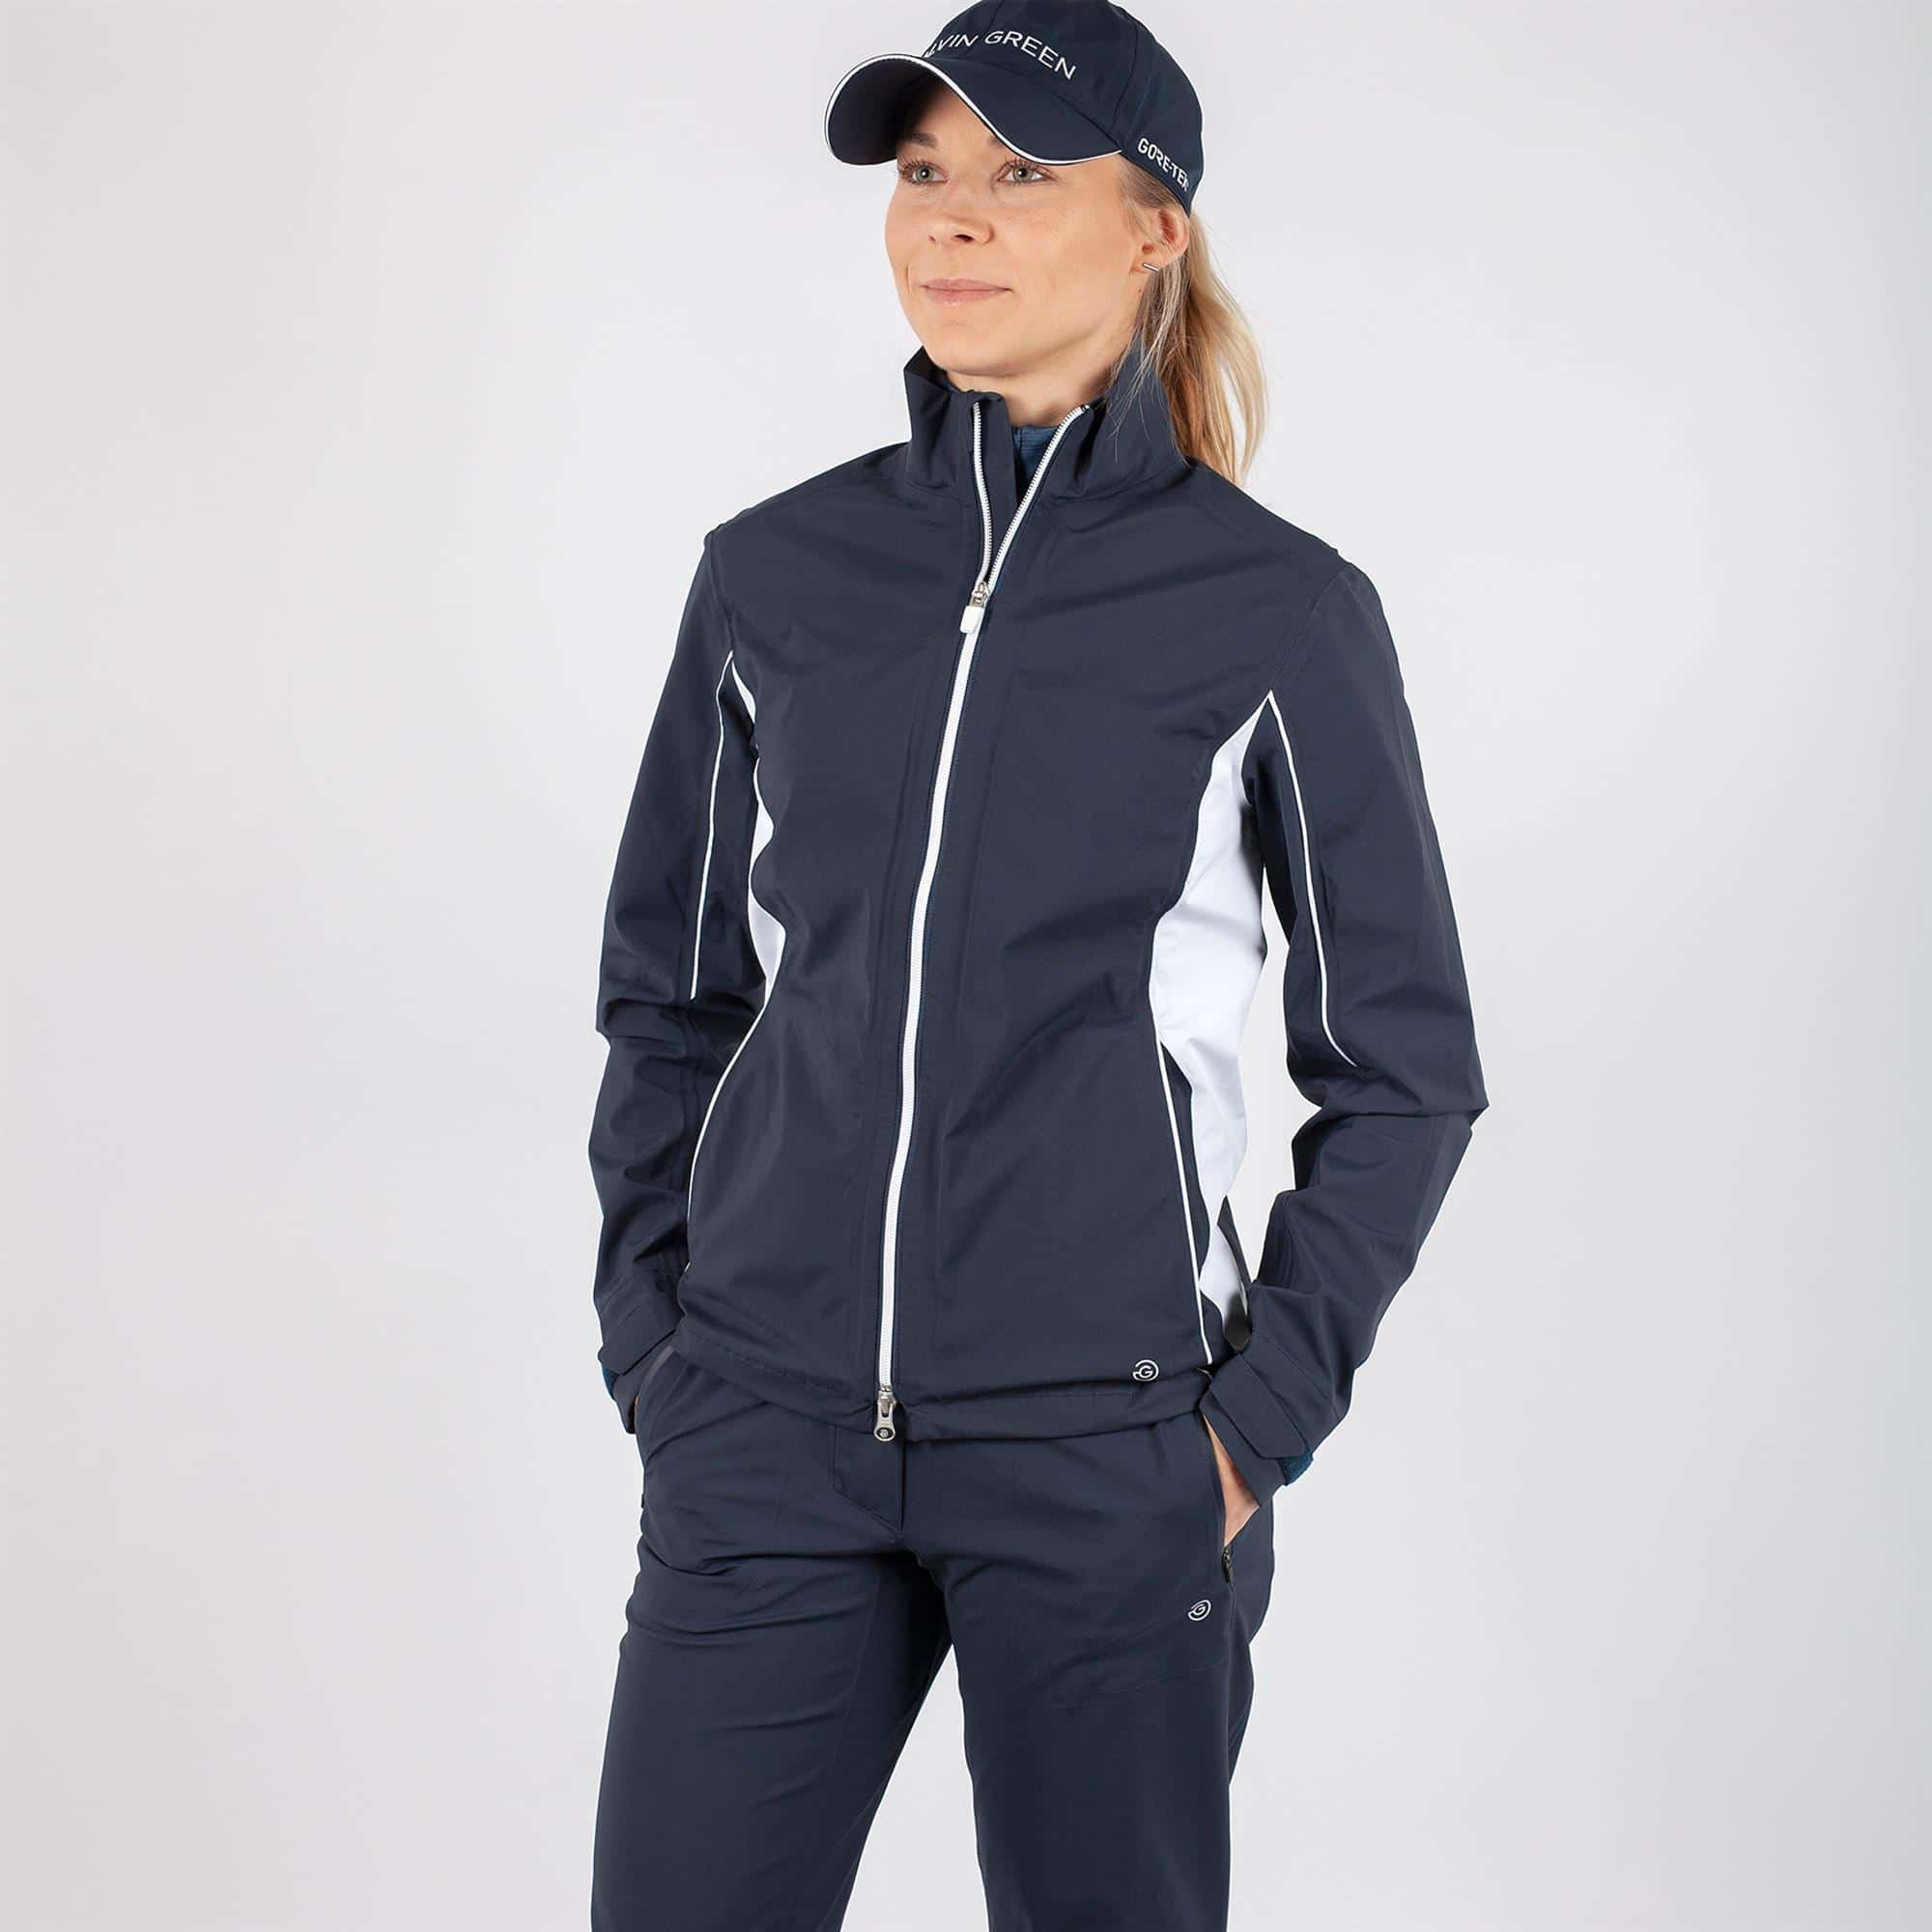 Galvin Green AL C-Knit Jacket Clothing Review - Golfalot